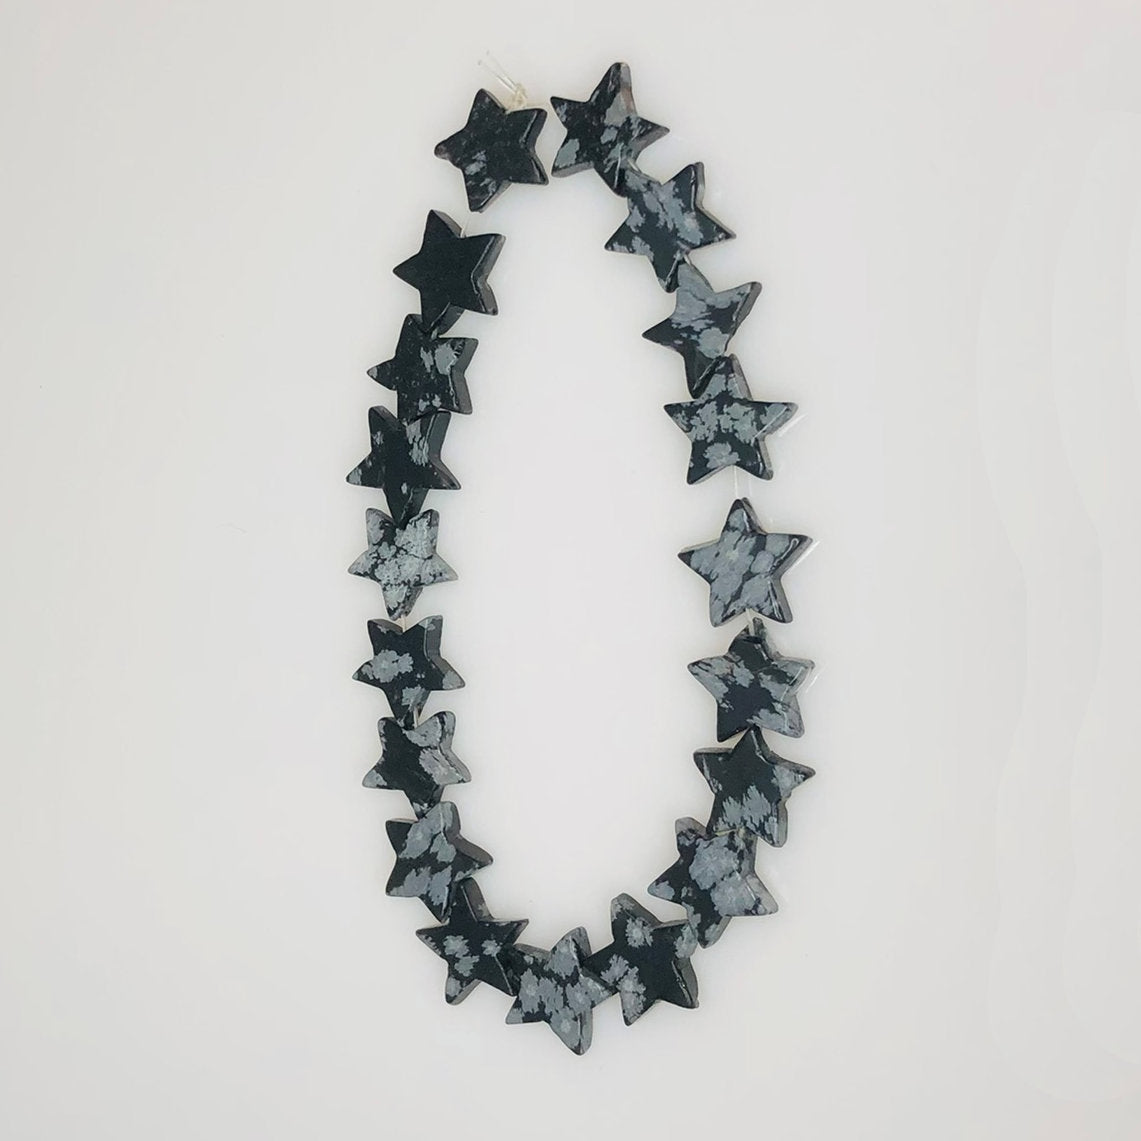 Snowflake Obsidian Semi-Precious Stone Star Beads, 12 mm - 19 Beads